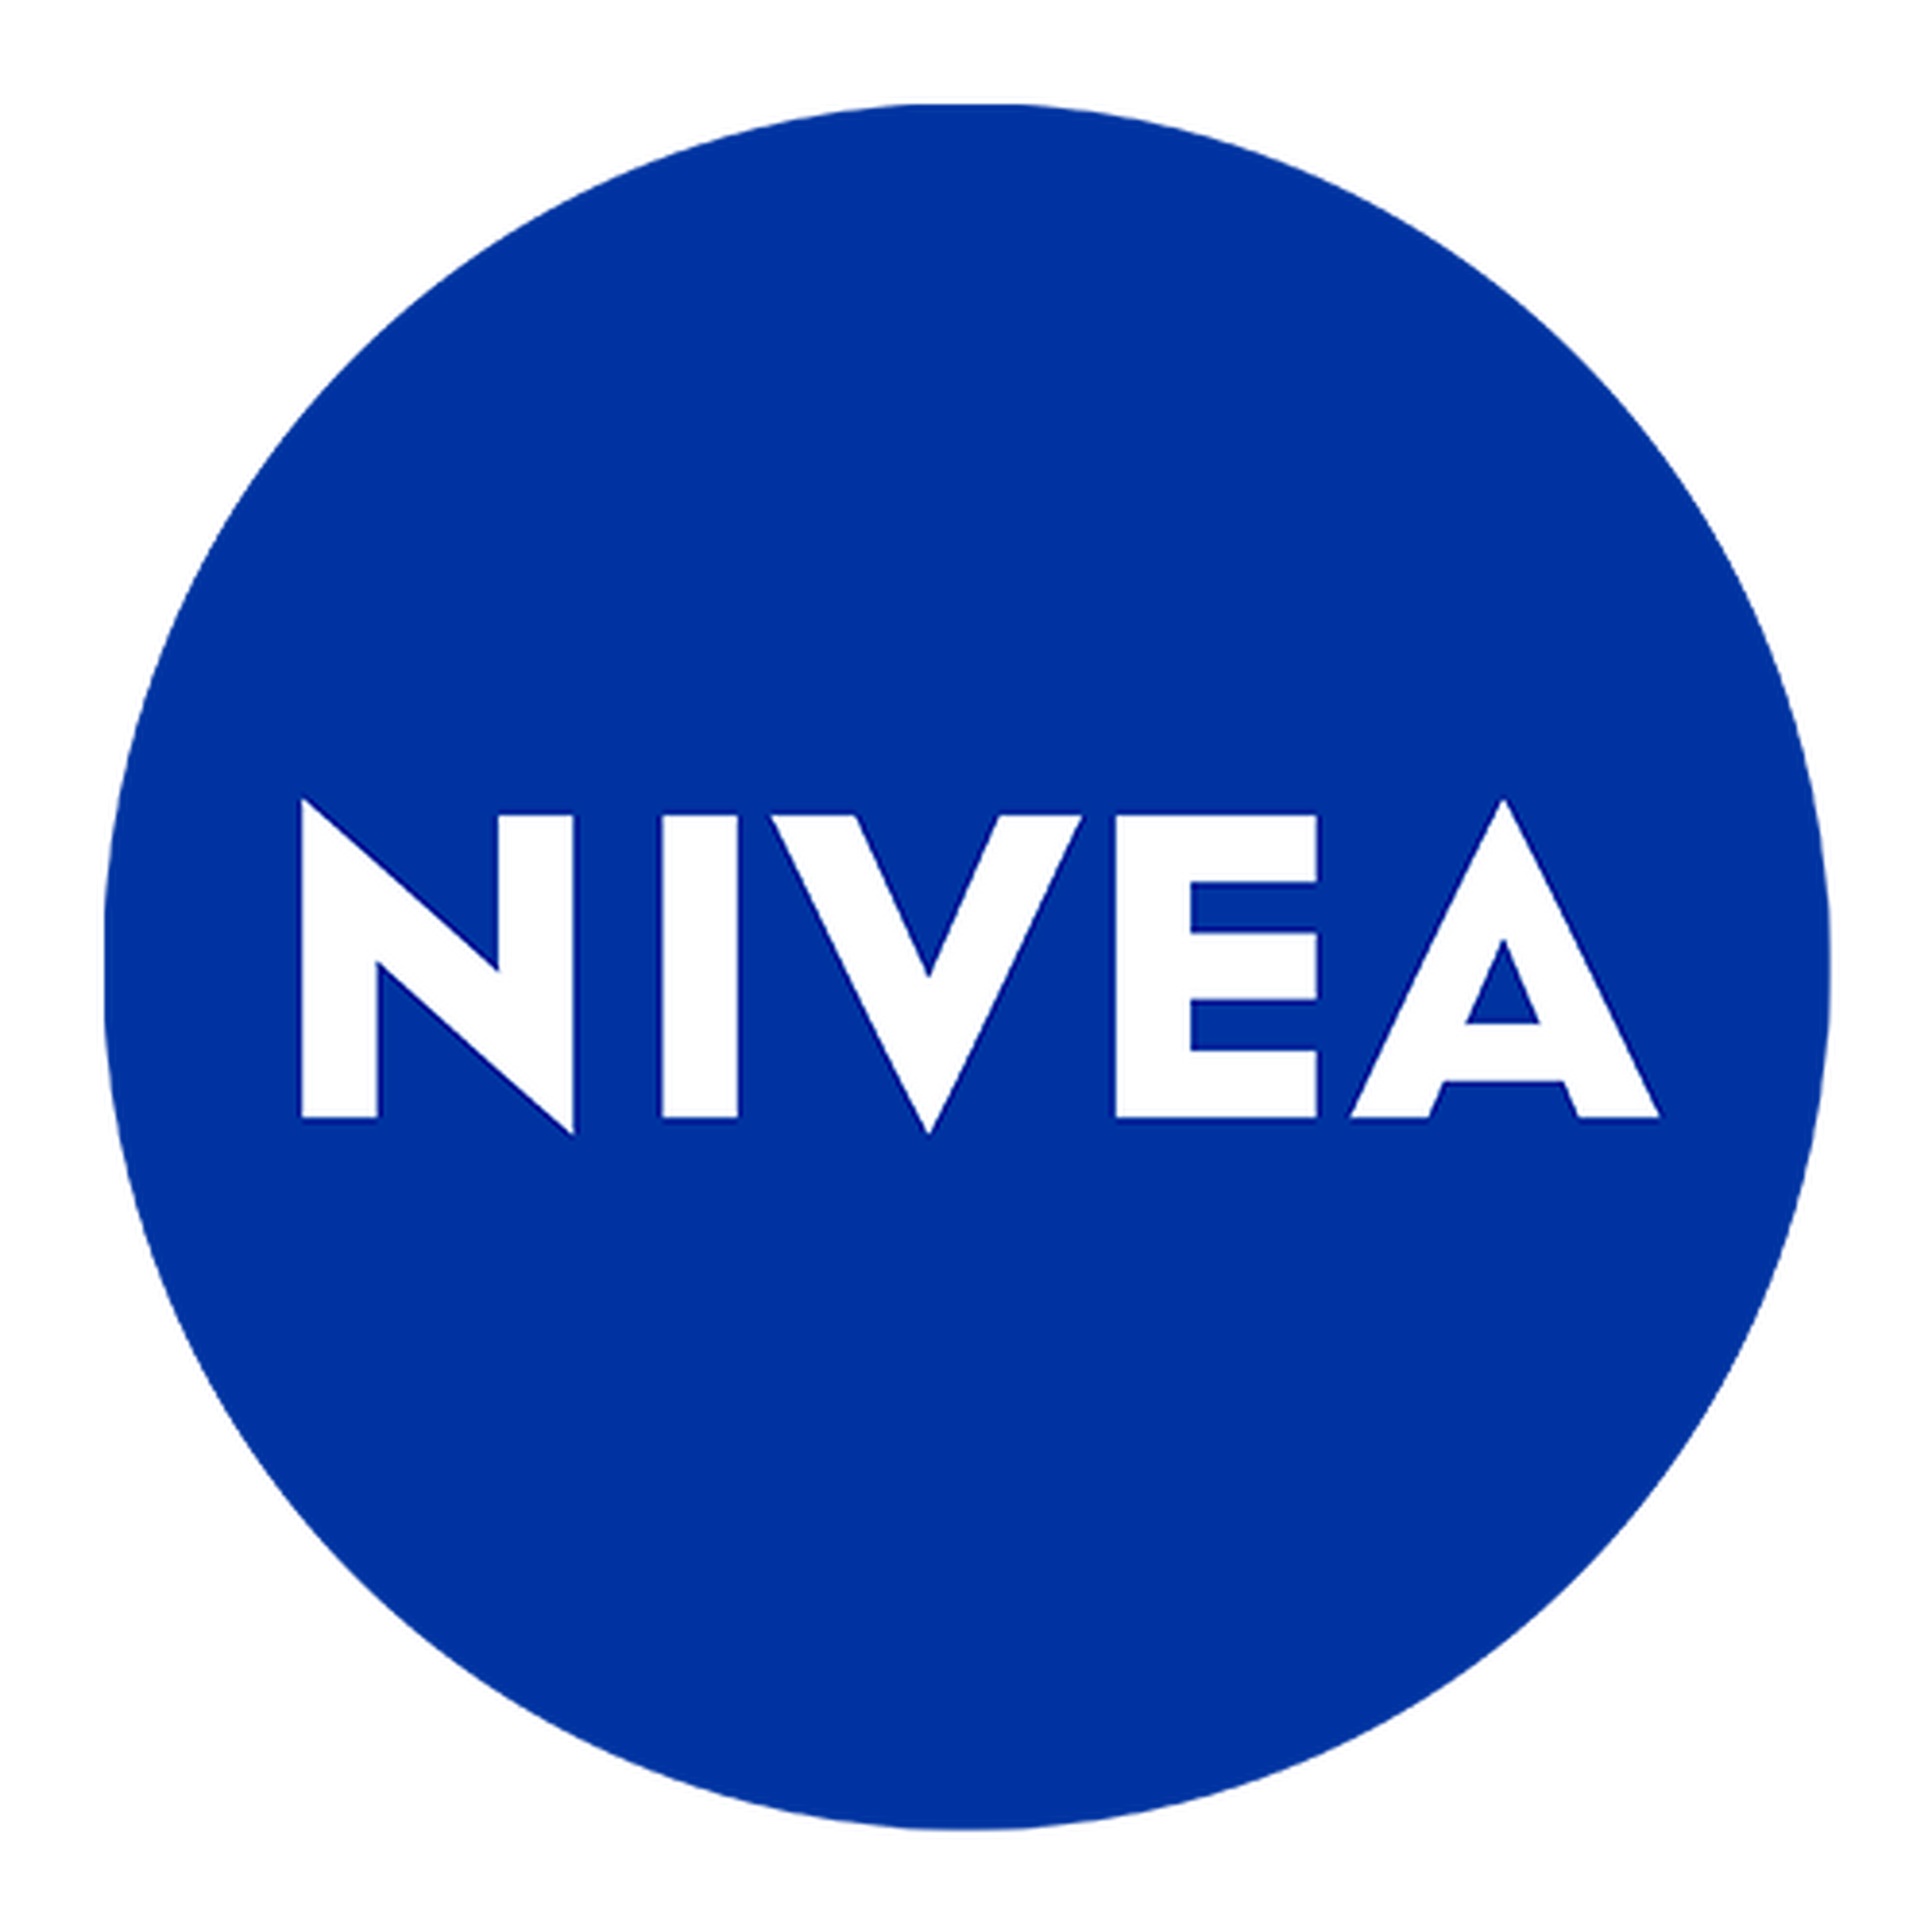 NIVEA logotype